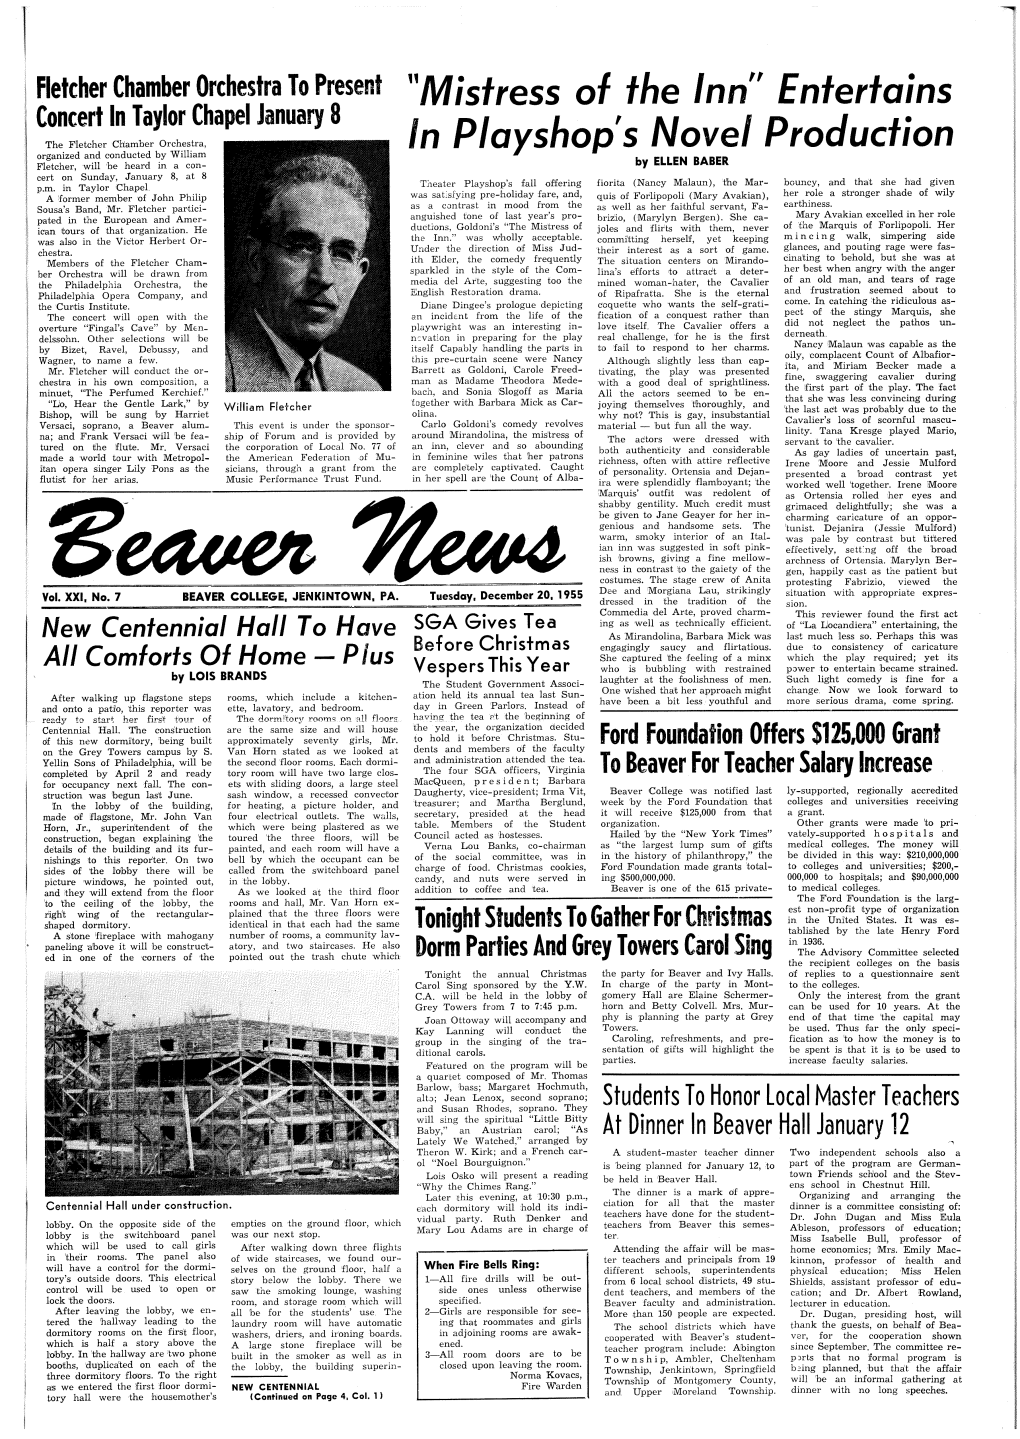 Beaver News, 22(7)